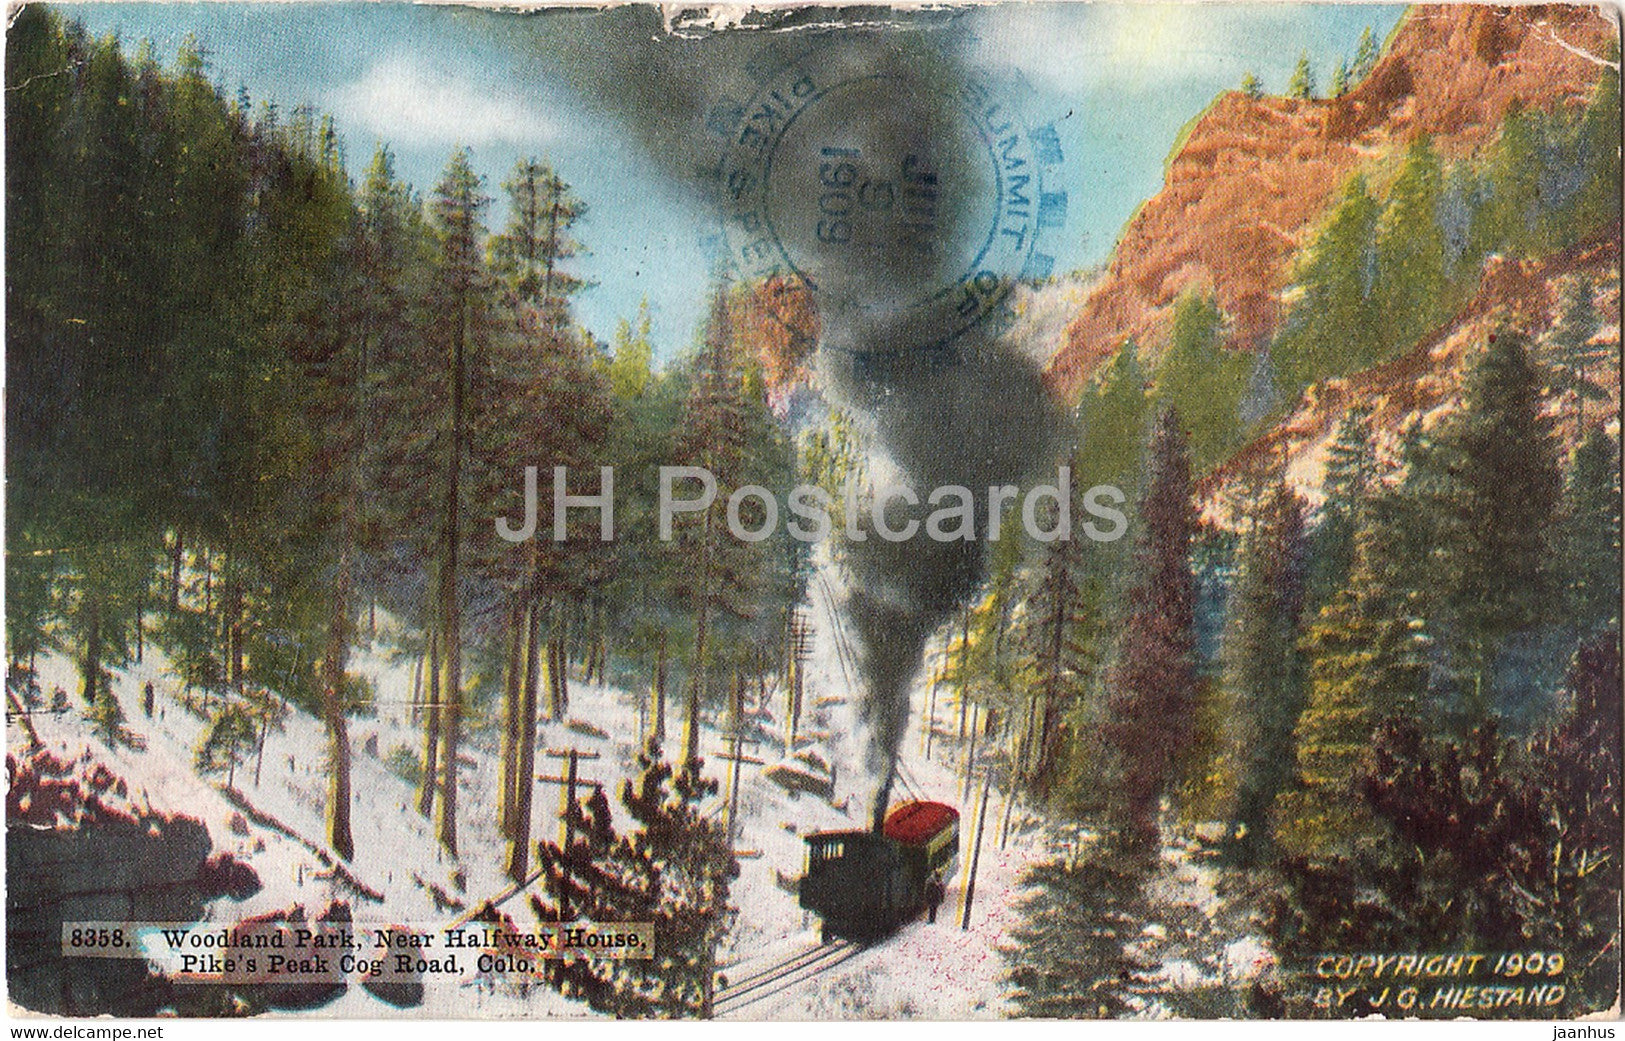 Woodland Park Near Halfway House - Pike's Peak Cog Road - train -  old postcard - 1909 - United States - USA - used - JH Postcards